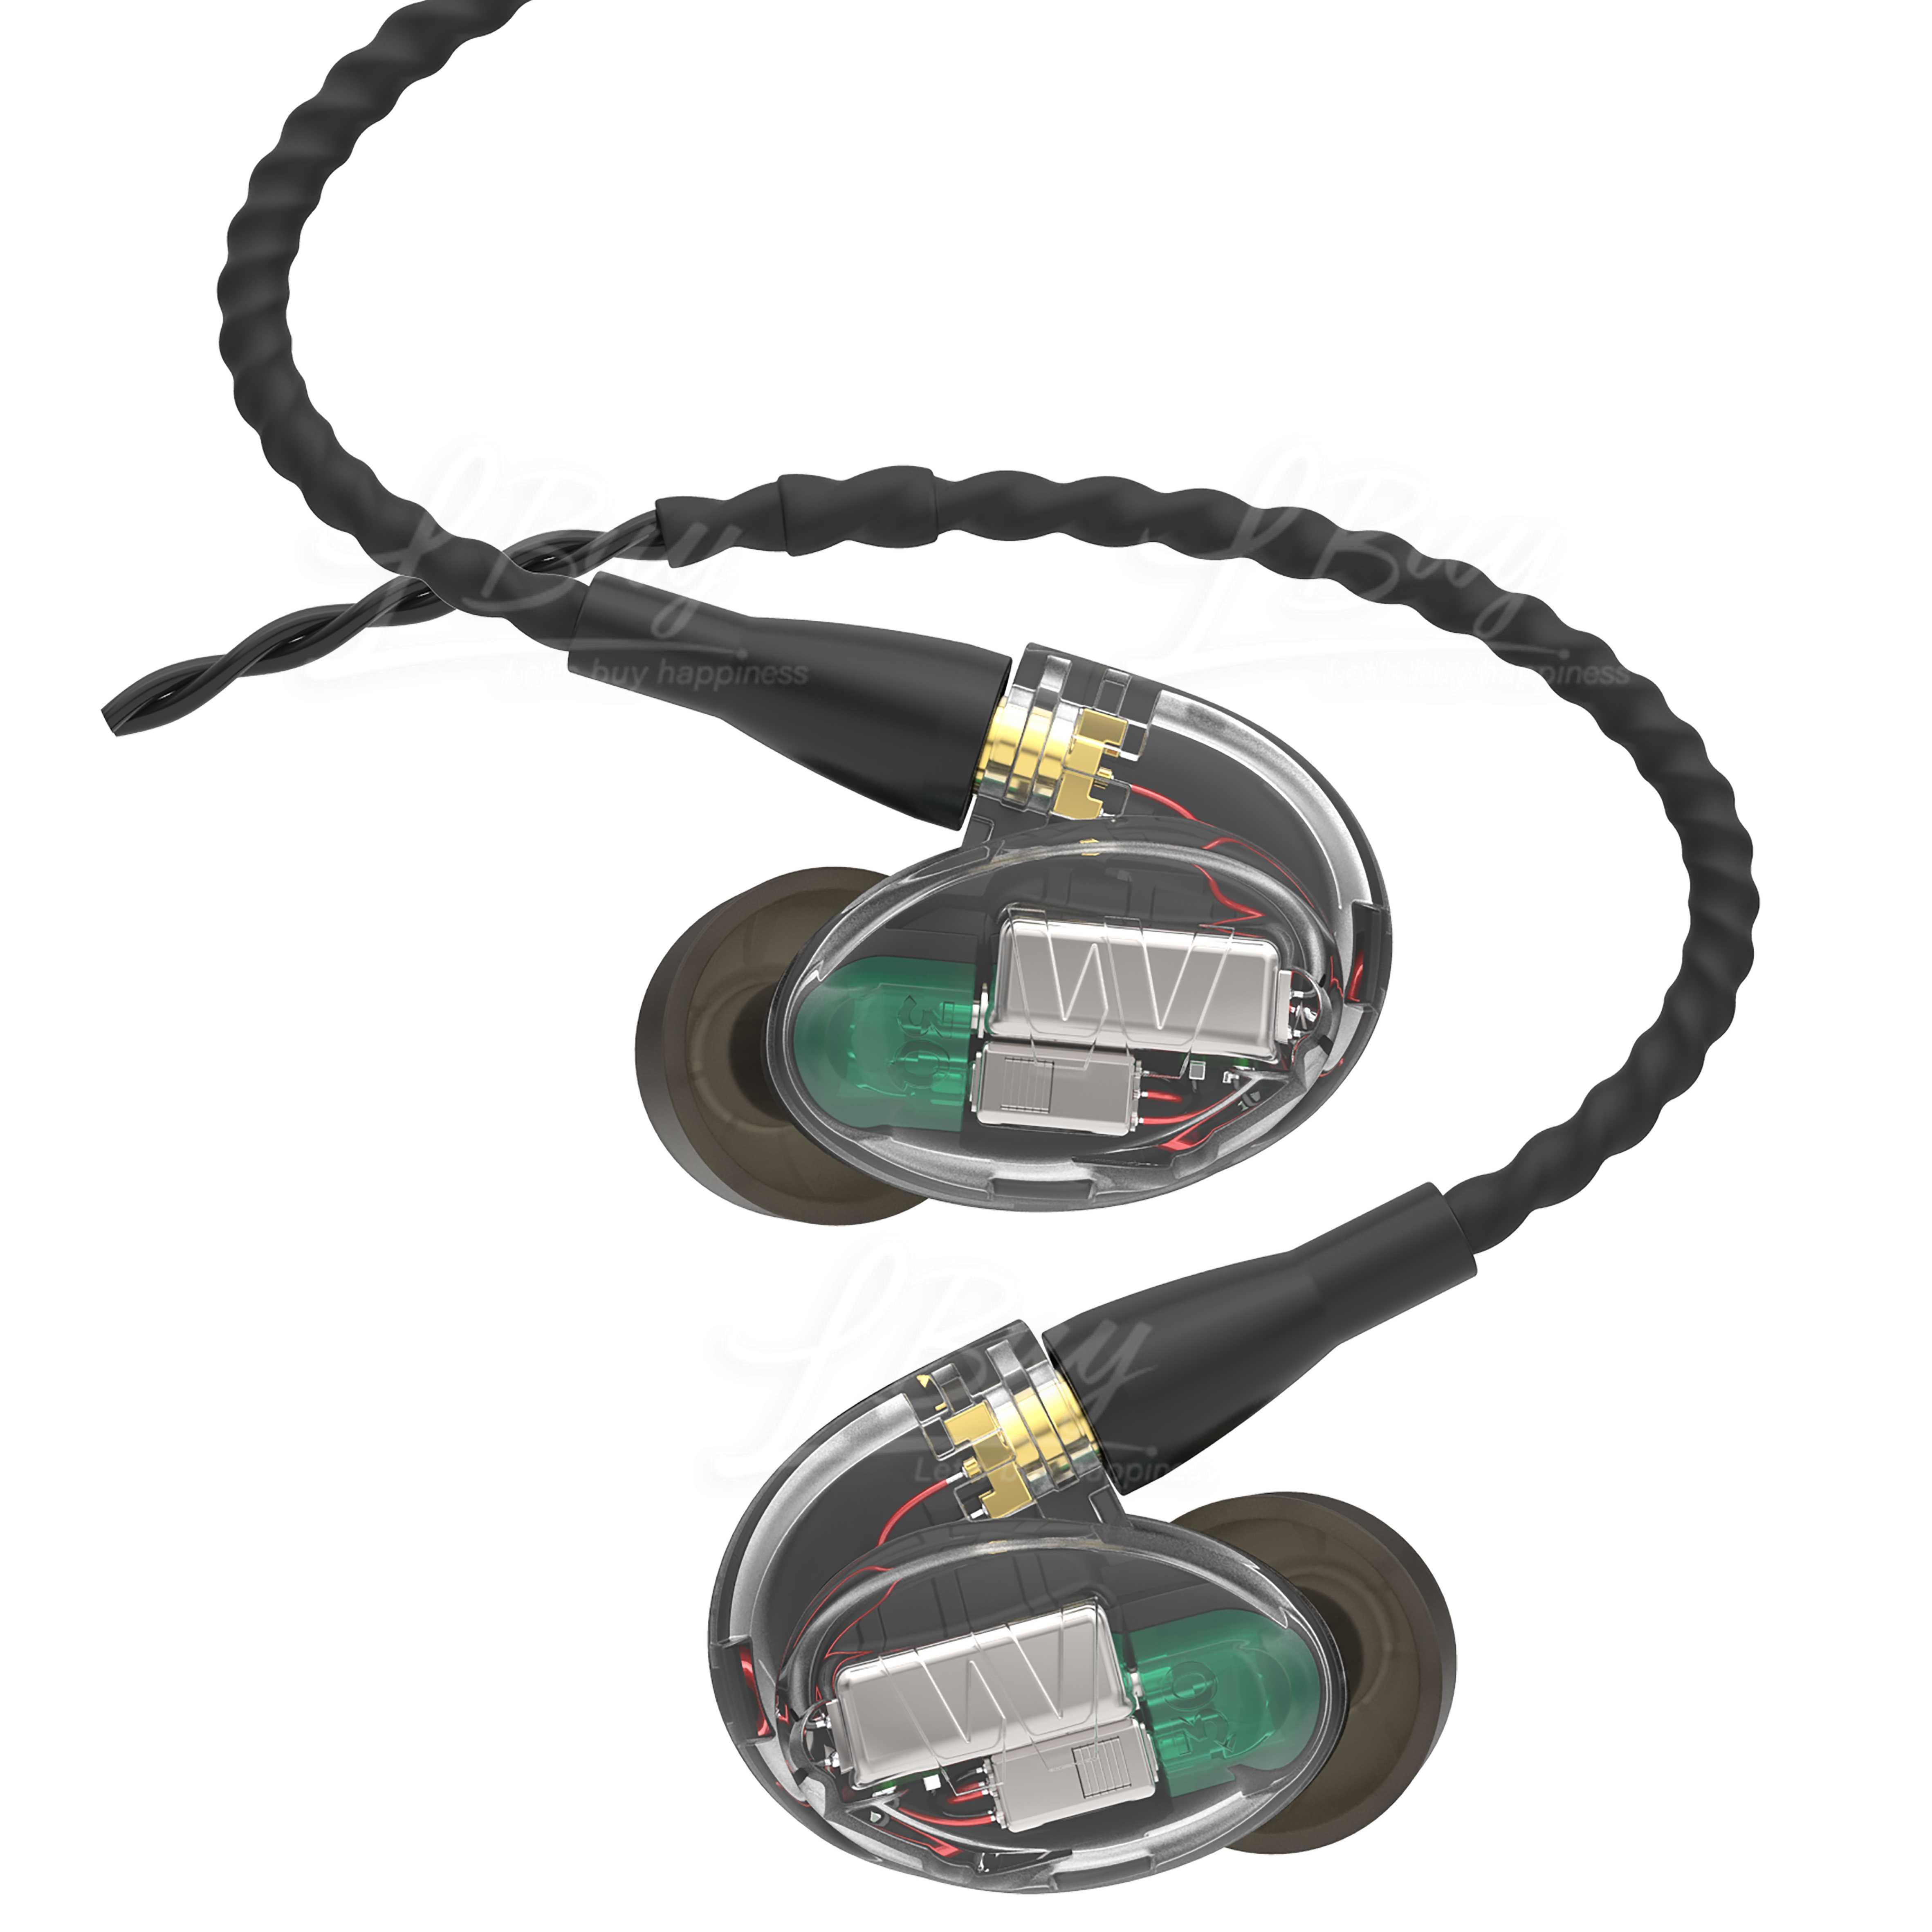 Westone UM Pro 30 Universal-Fit earphones (Smoke)